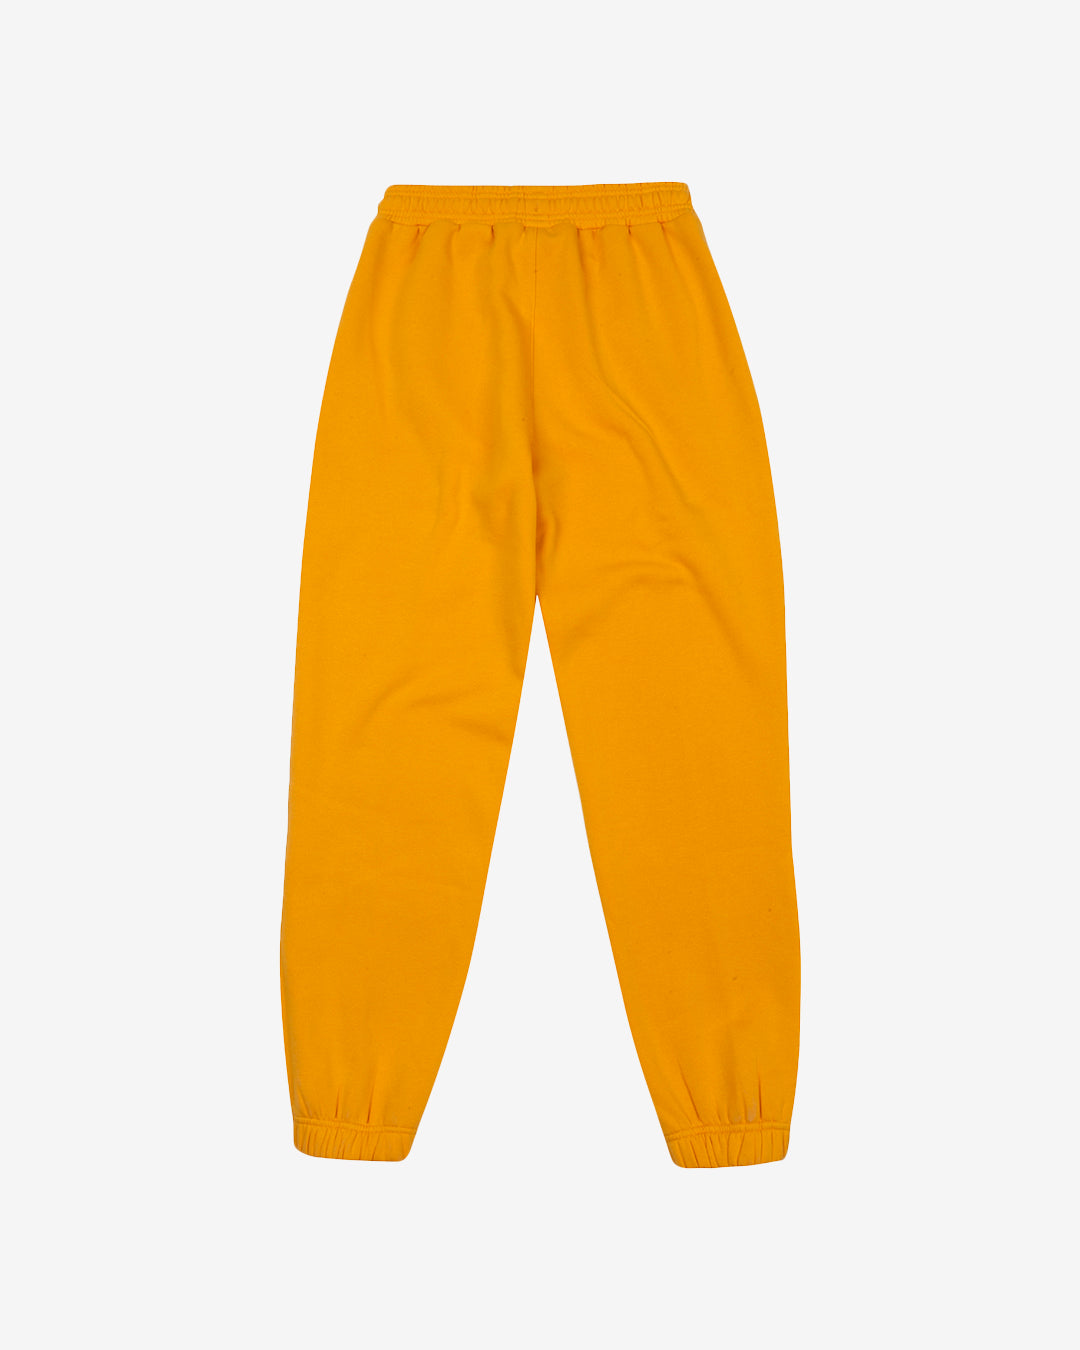 PFC: 002-4 - Womens Sweatpants - Amber Yellow